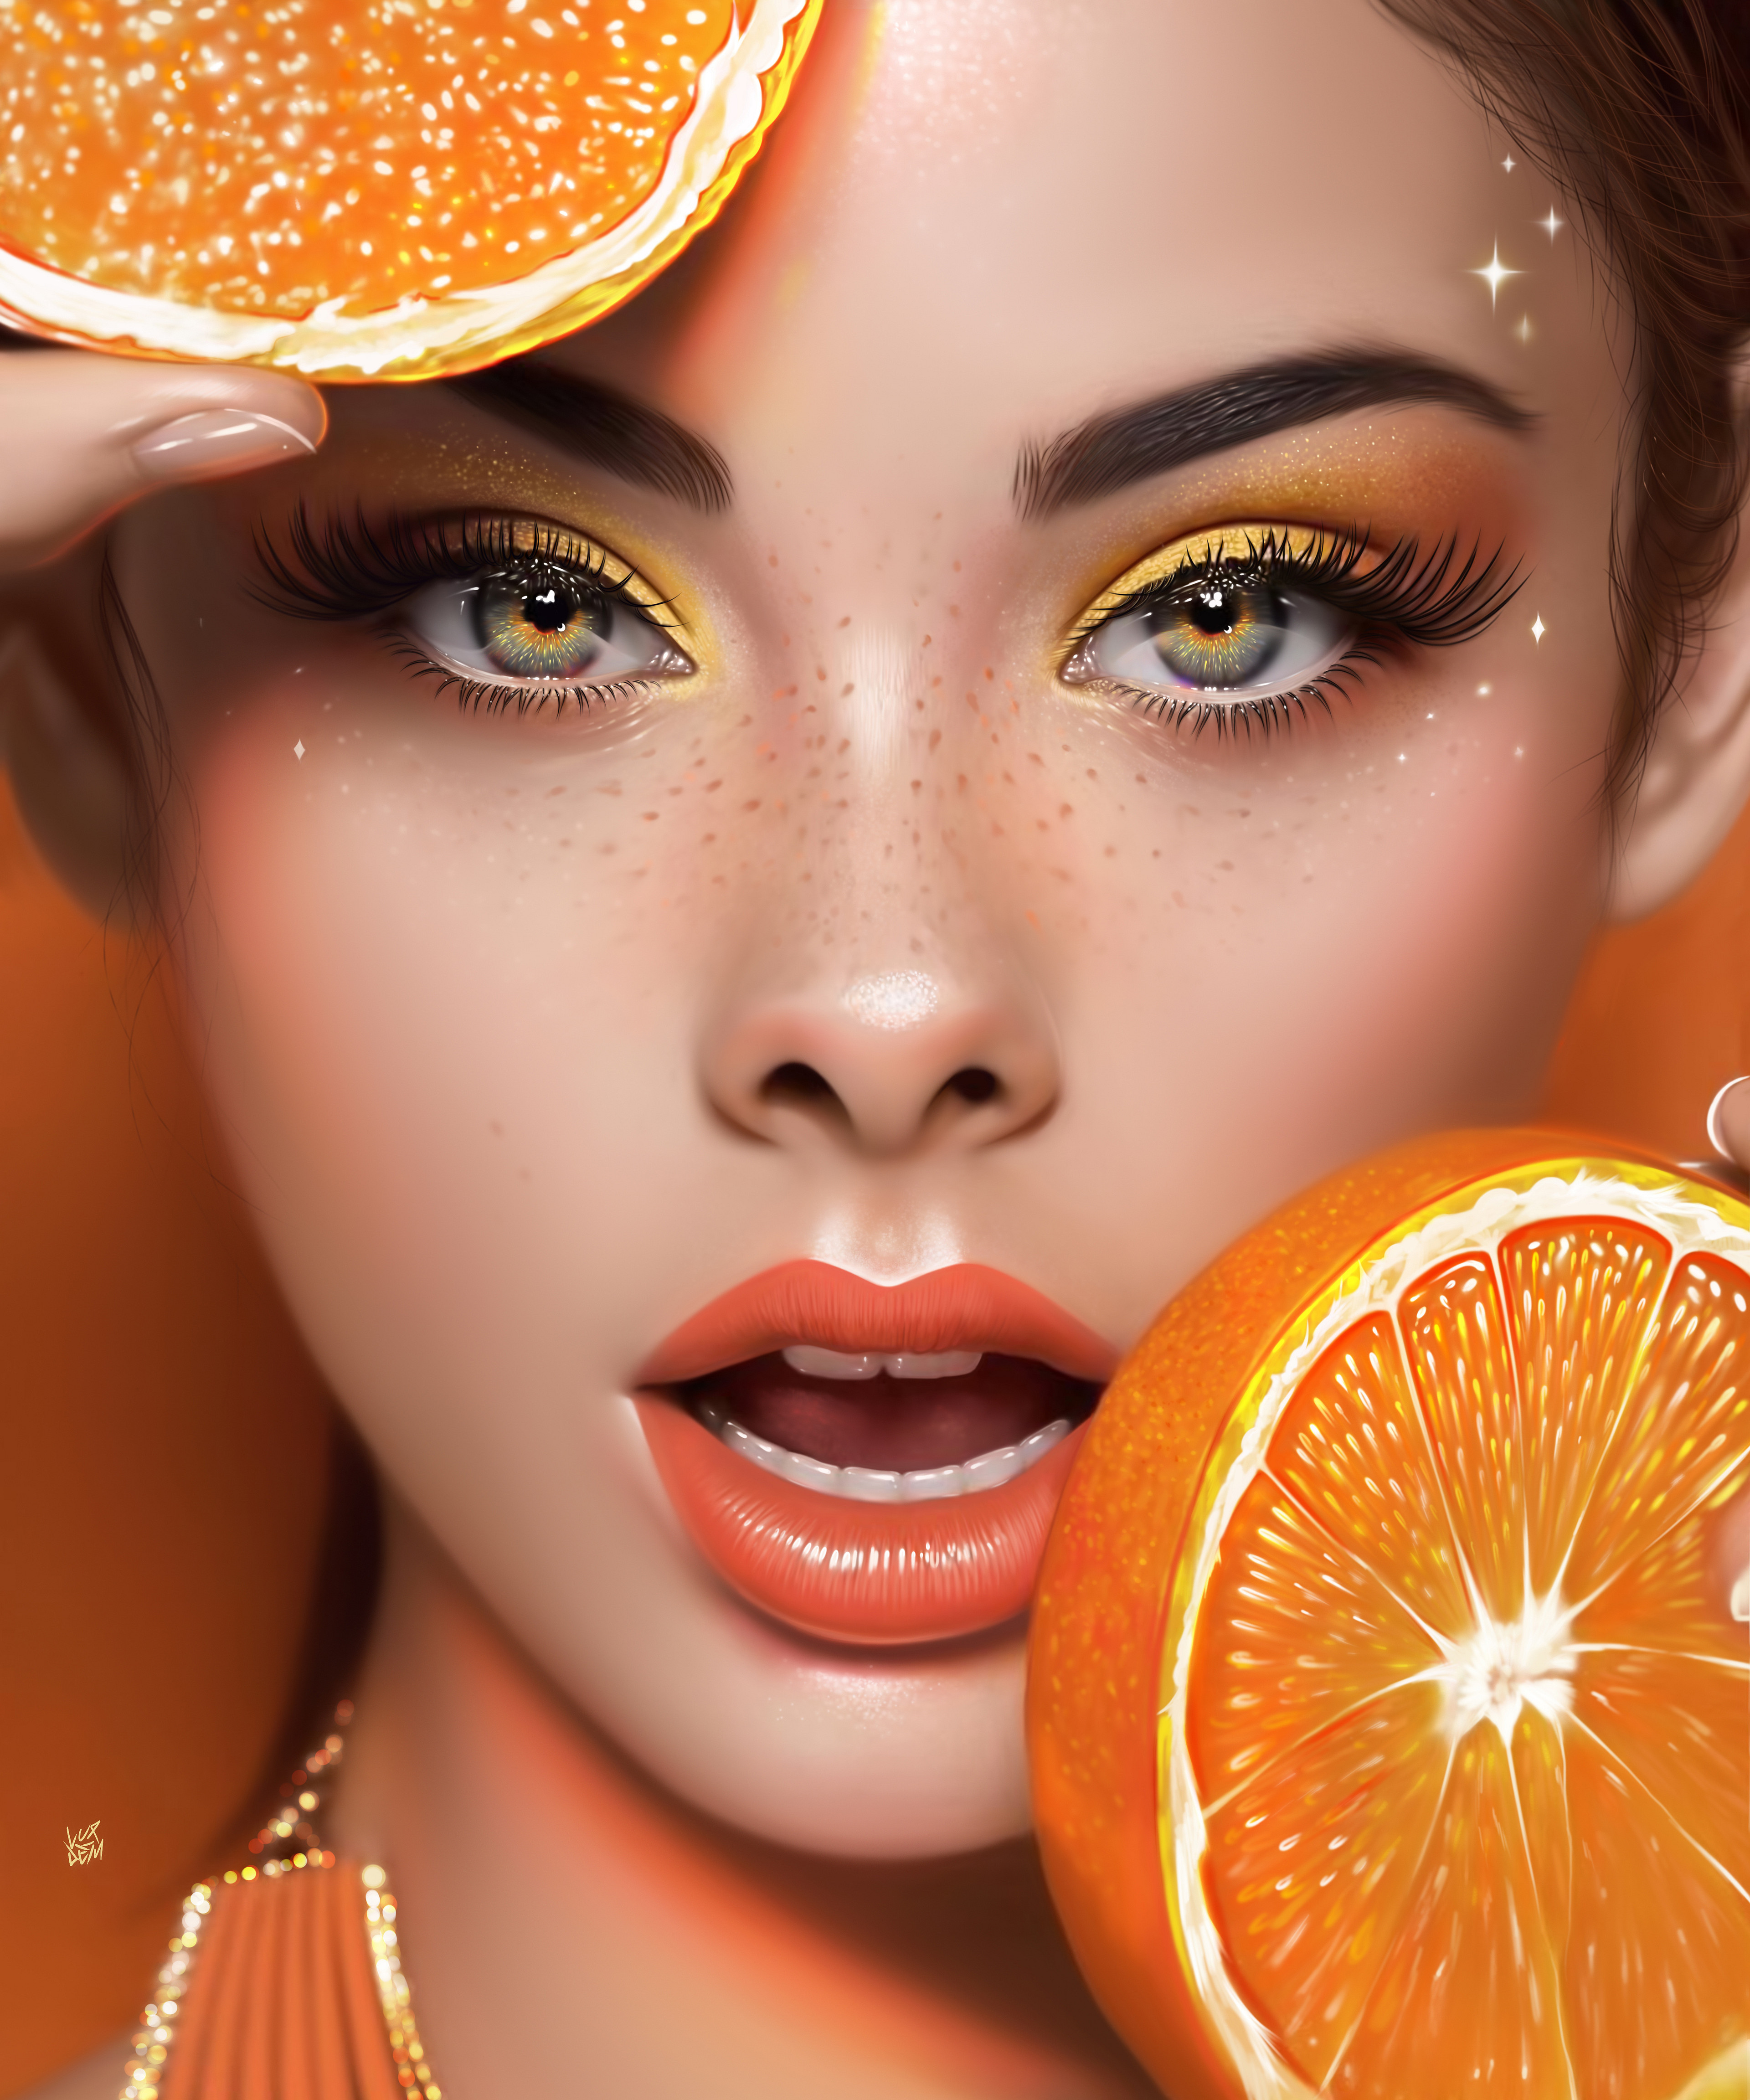 ArtStation Women Portrait Portrait Display Makeup Freckles Open Mouth Orange Fruit Looking At Viewer 3840x4608